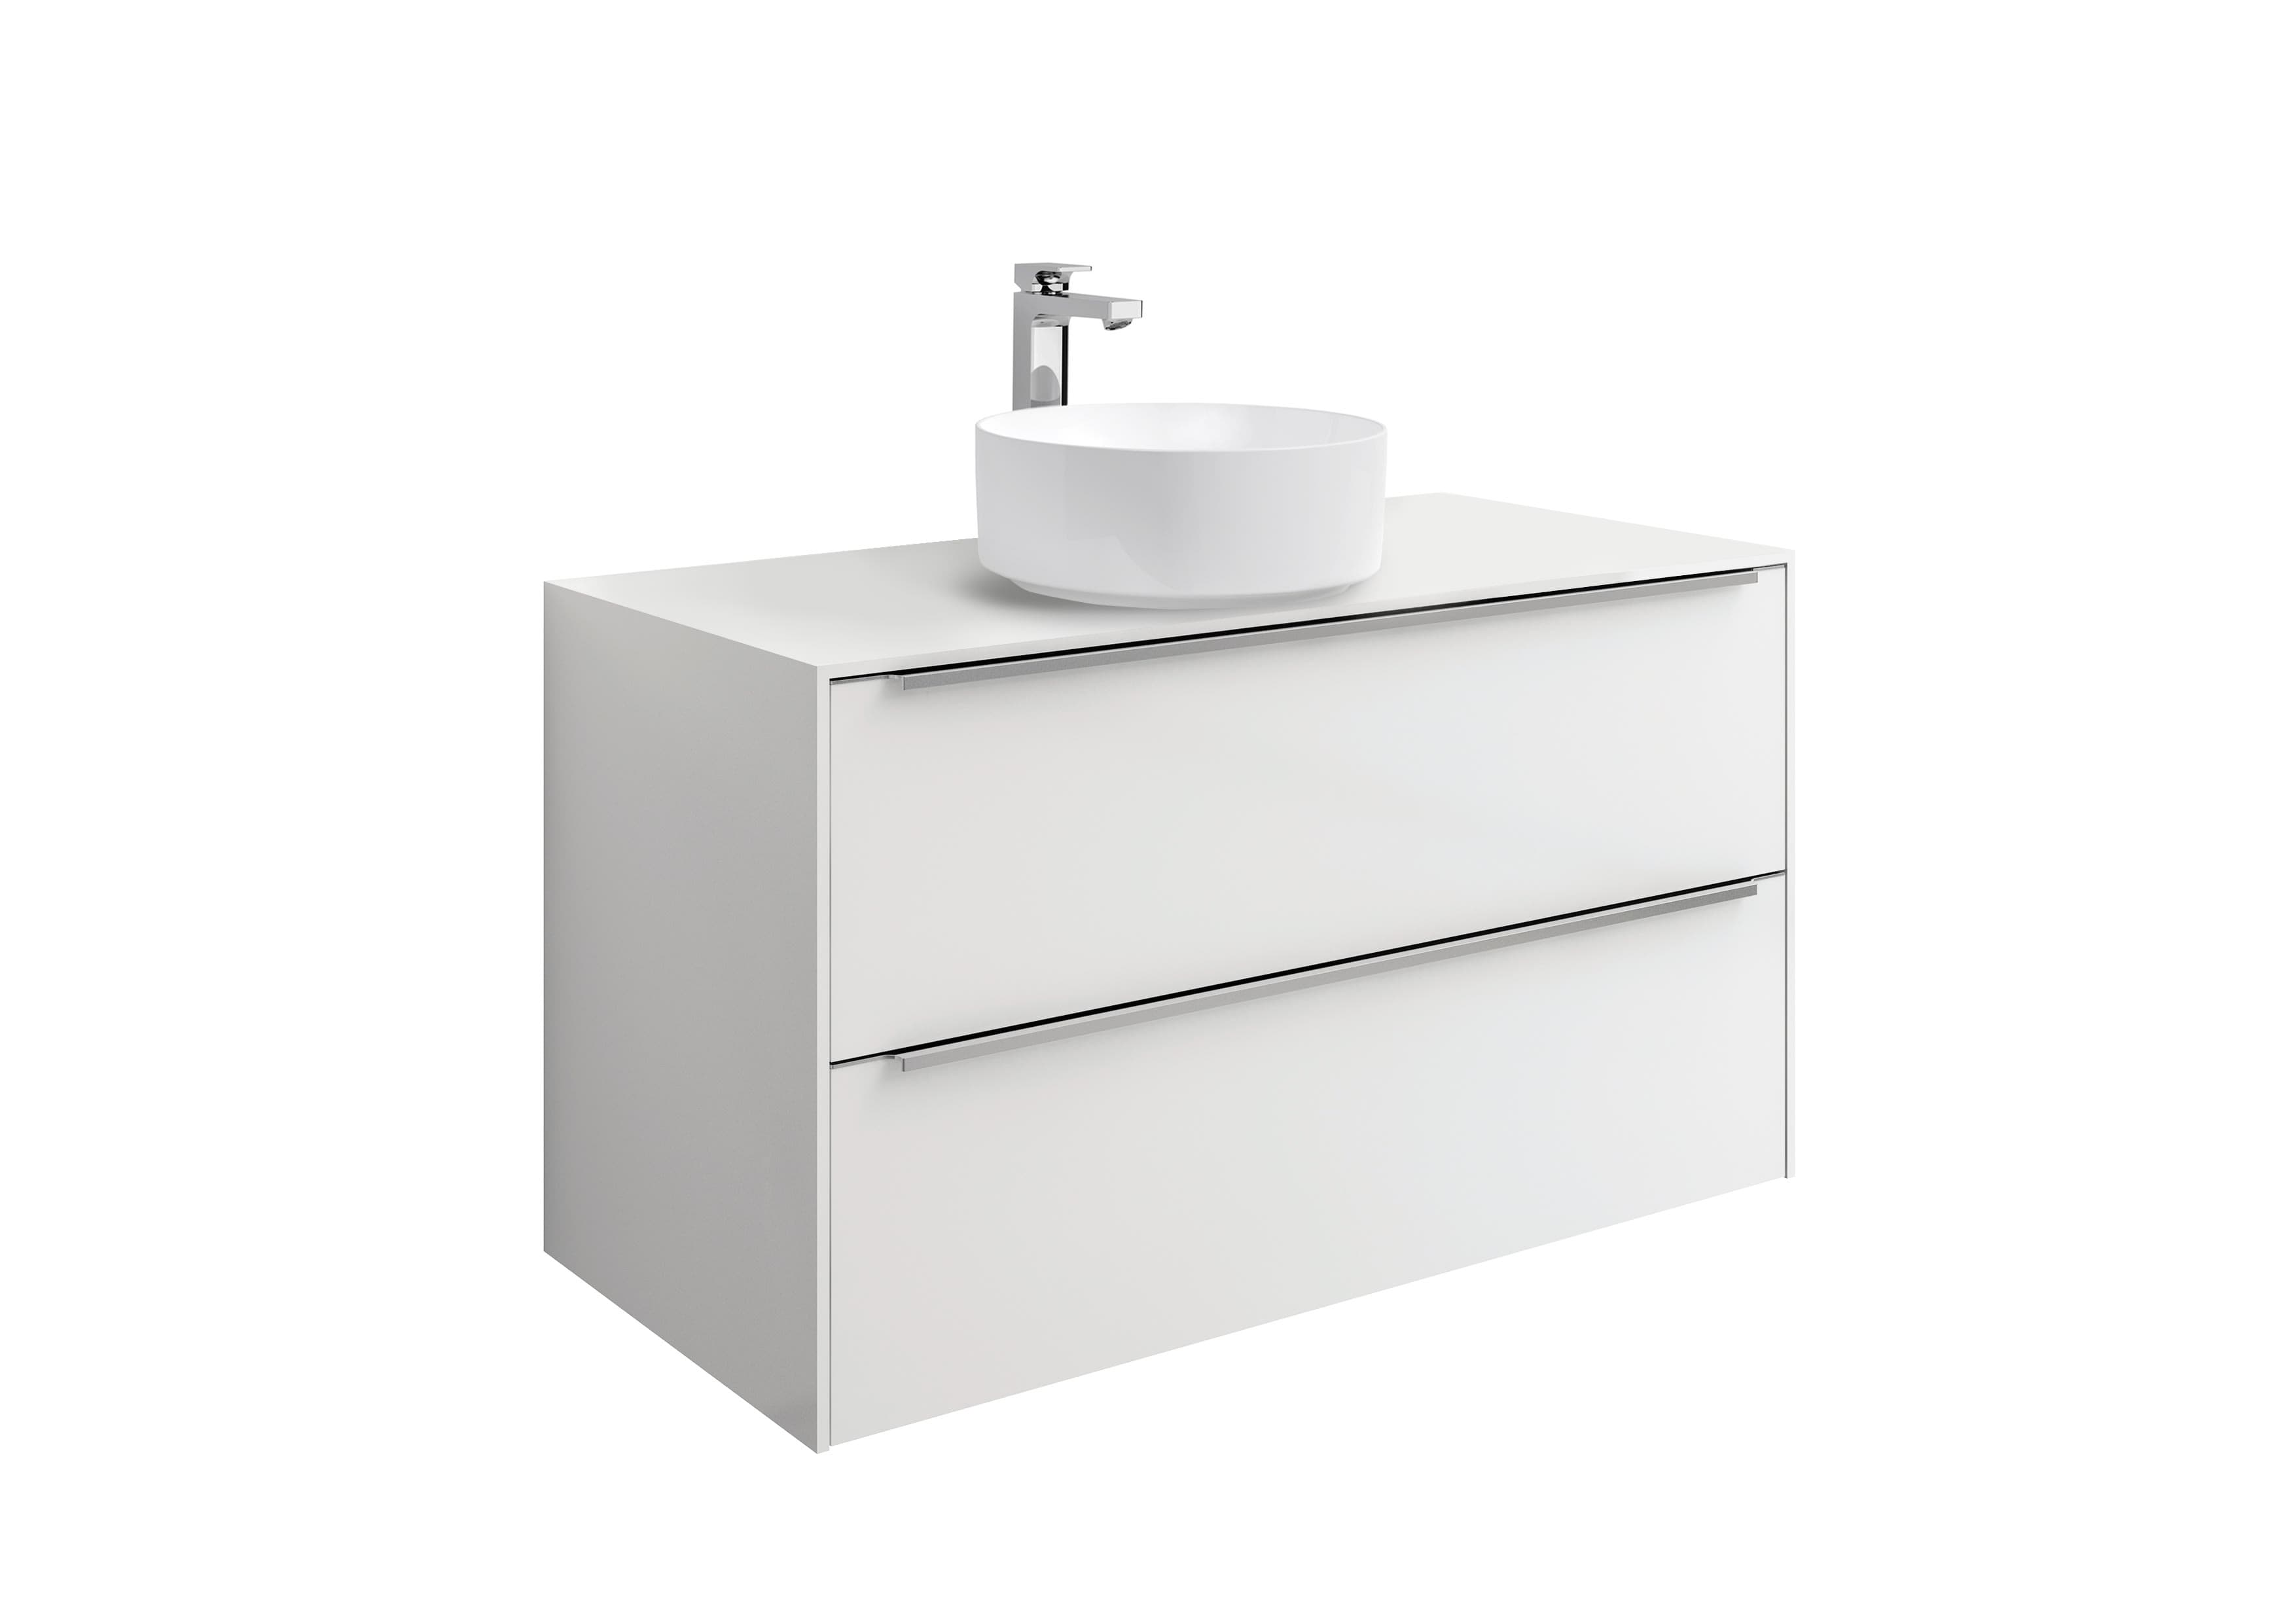 Sanitaire Meubles Salle de bain INSPIRA A851081402 Meuble 2 tiroirs avec plan pour vasque à poser Roca 8 - Mirage ceramica